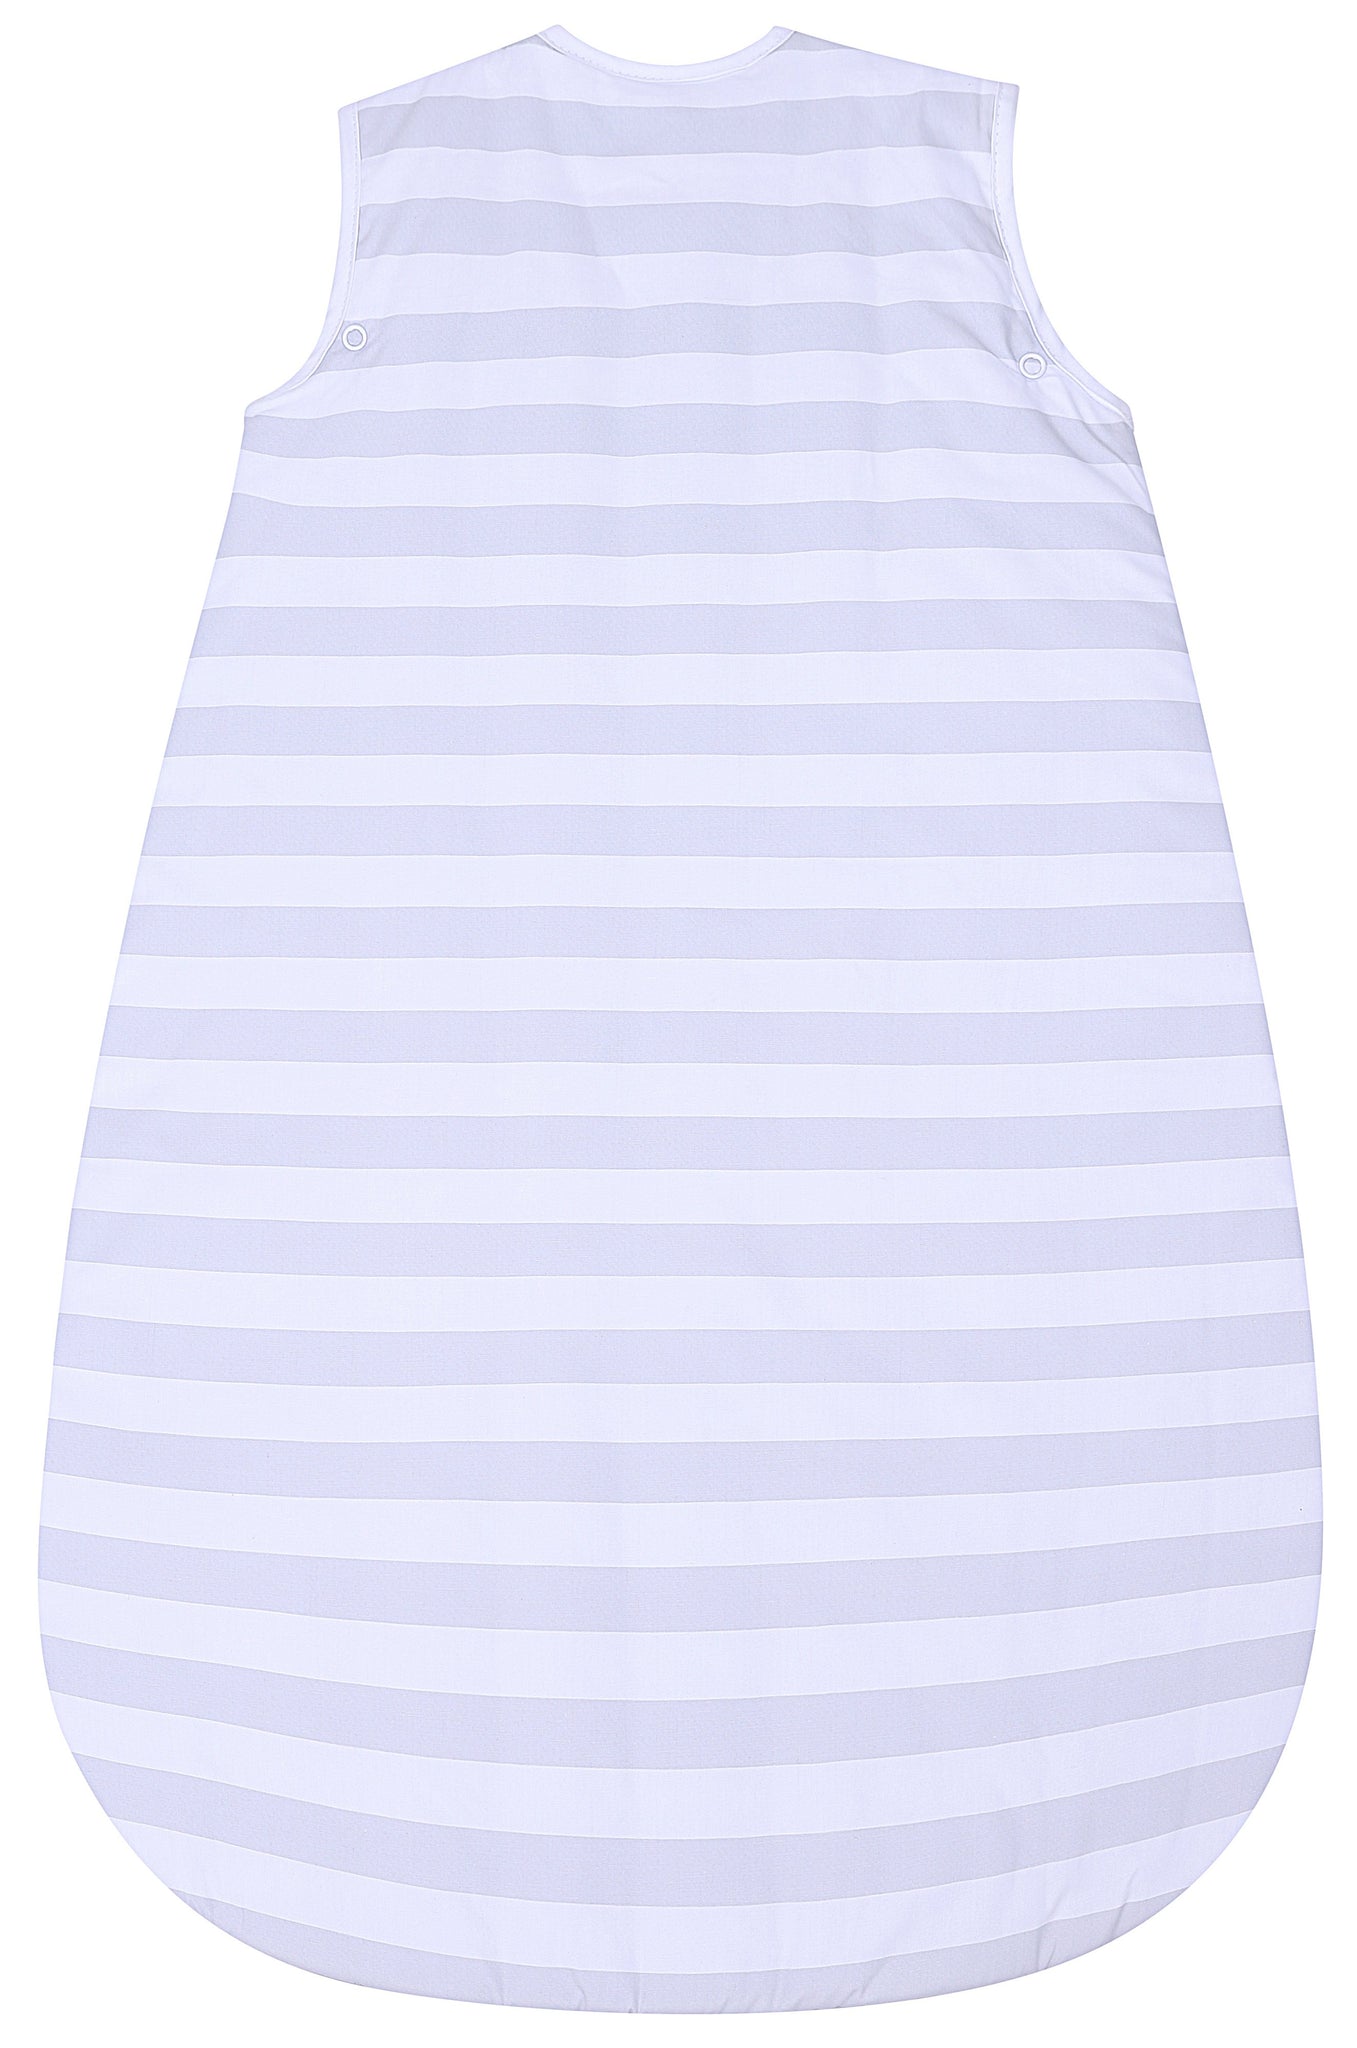 Snoozebag Baby Sleep Bag Grey Stripe 6-18 Months Front Zip 2020 Version 2.5 Tog